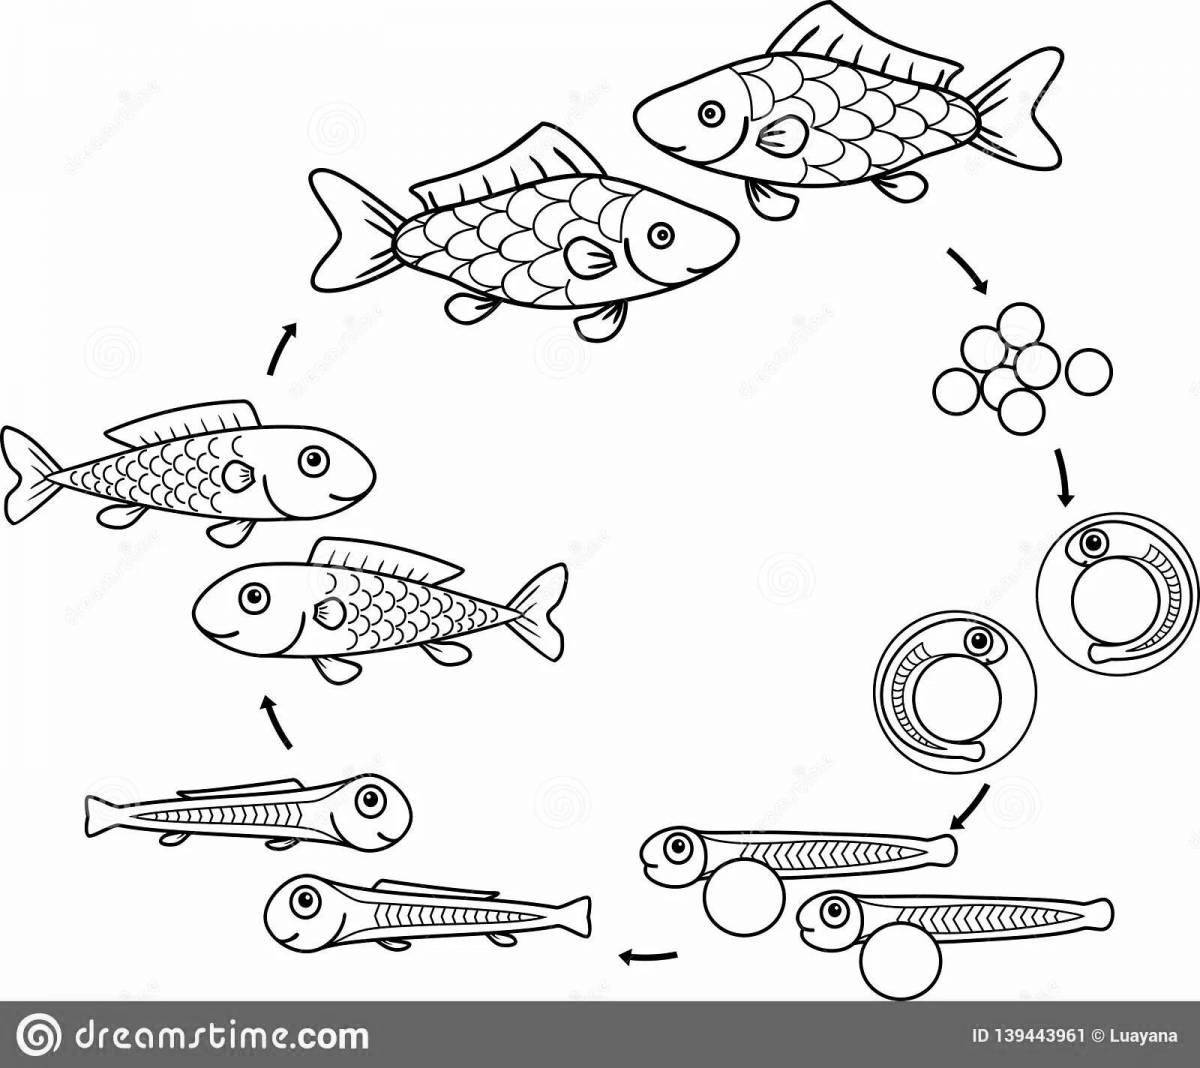 Пример раскраски структуры рыбы